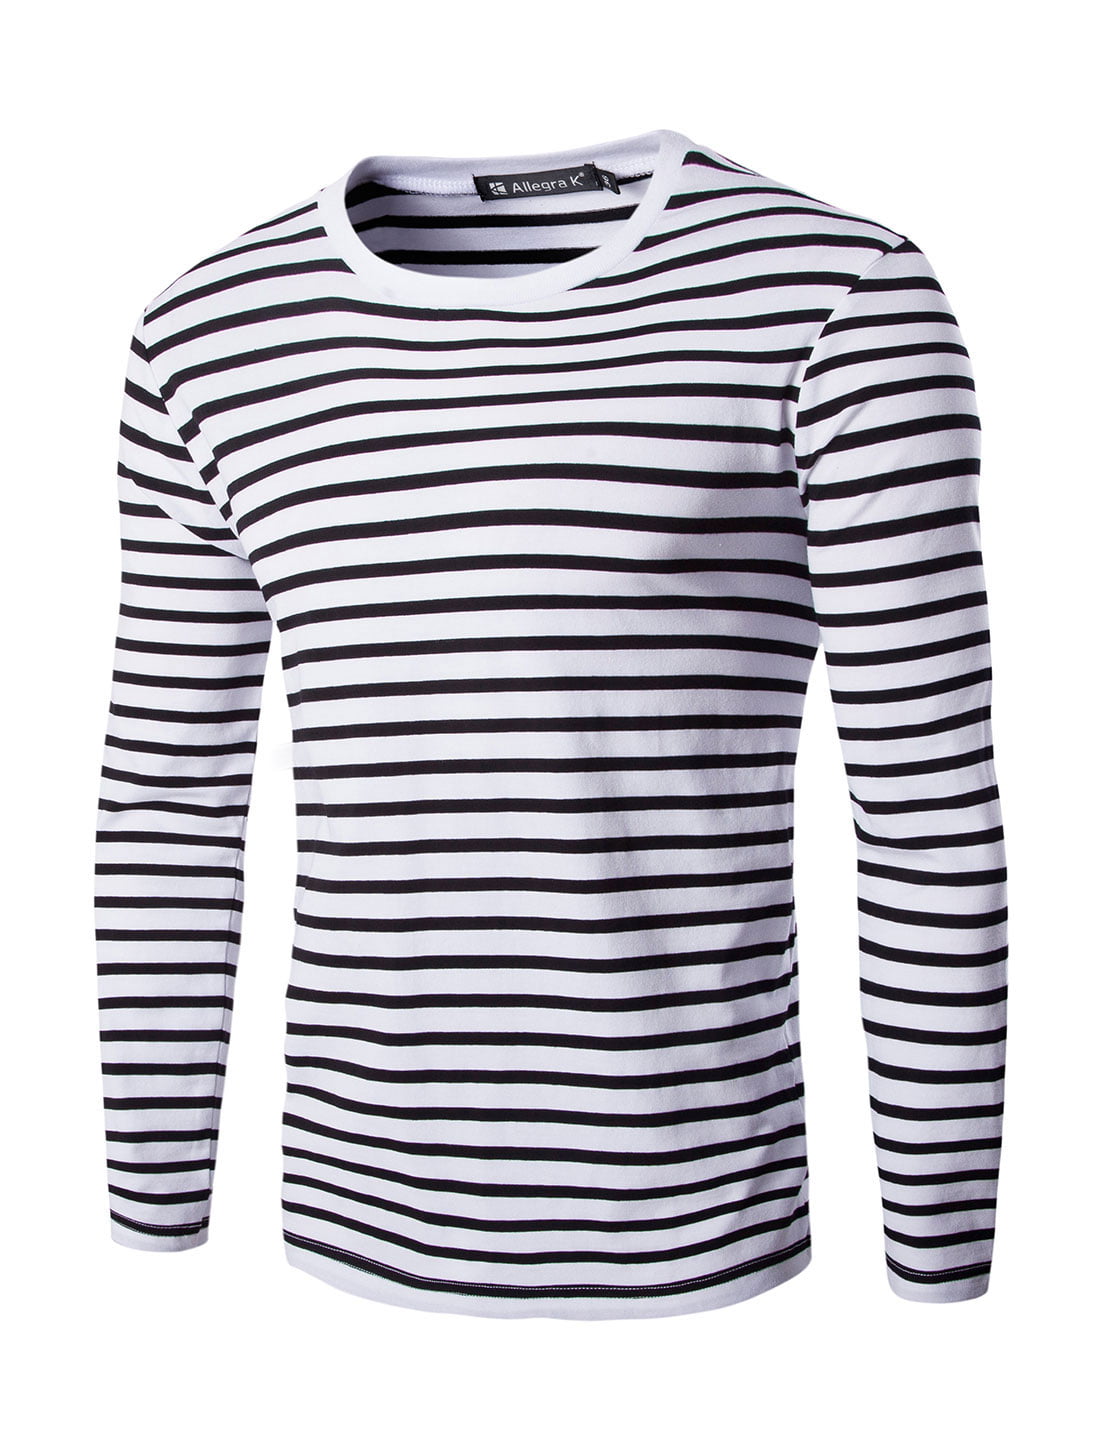 Men Crew Neck Long Sleeves Striped T-shirt Black White XL | Walmart Canada